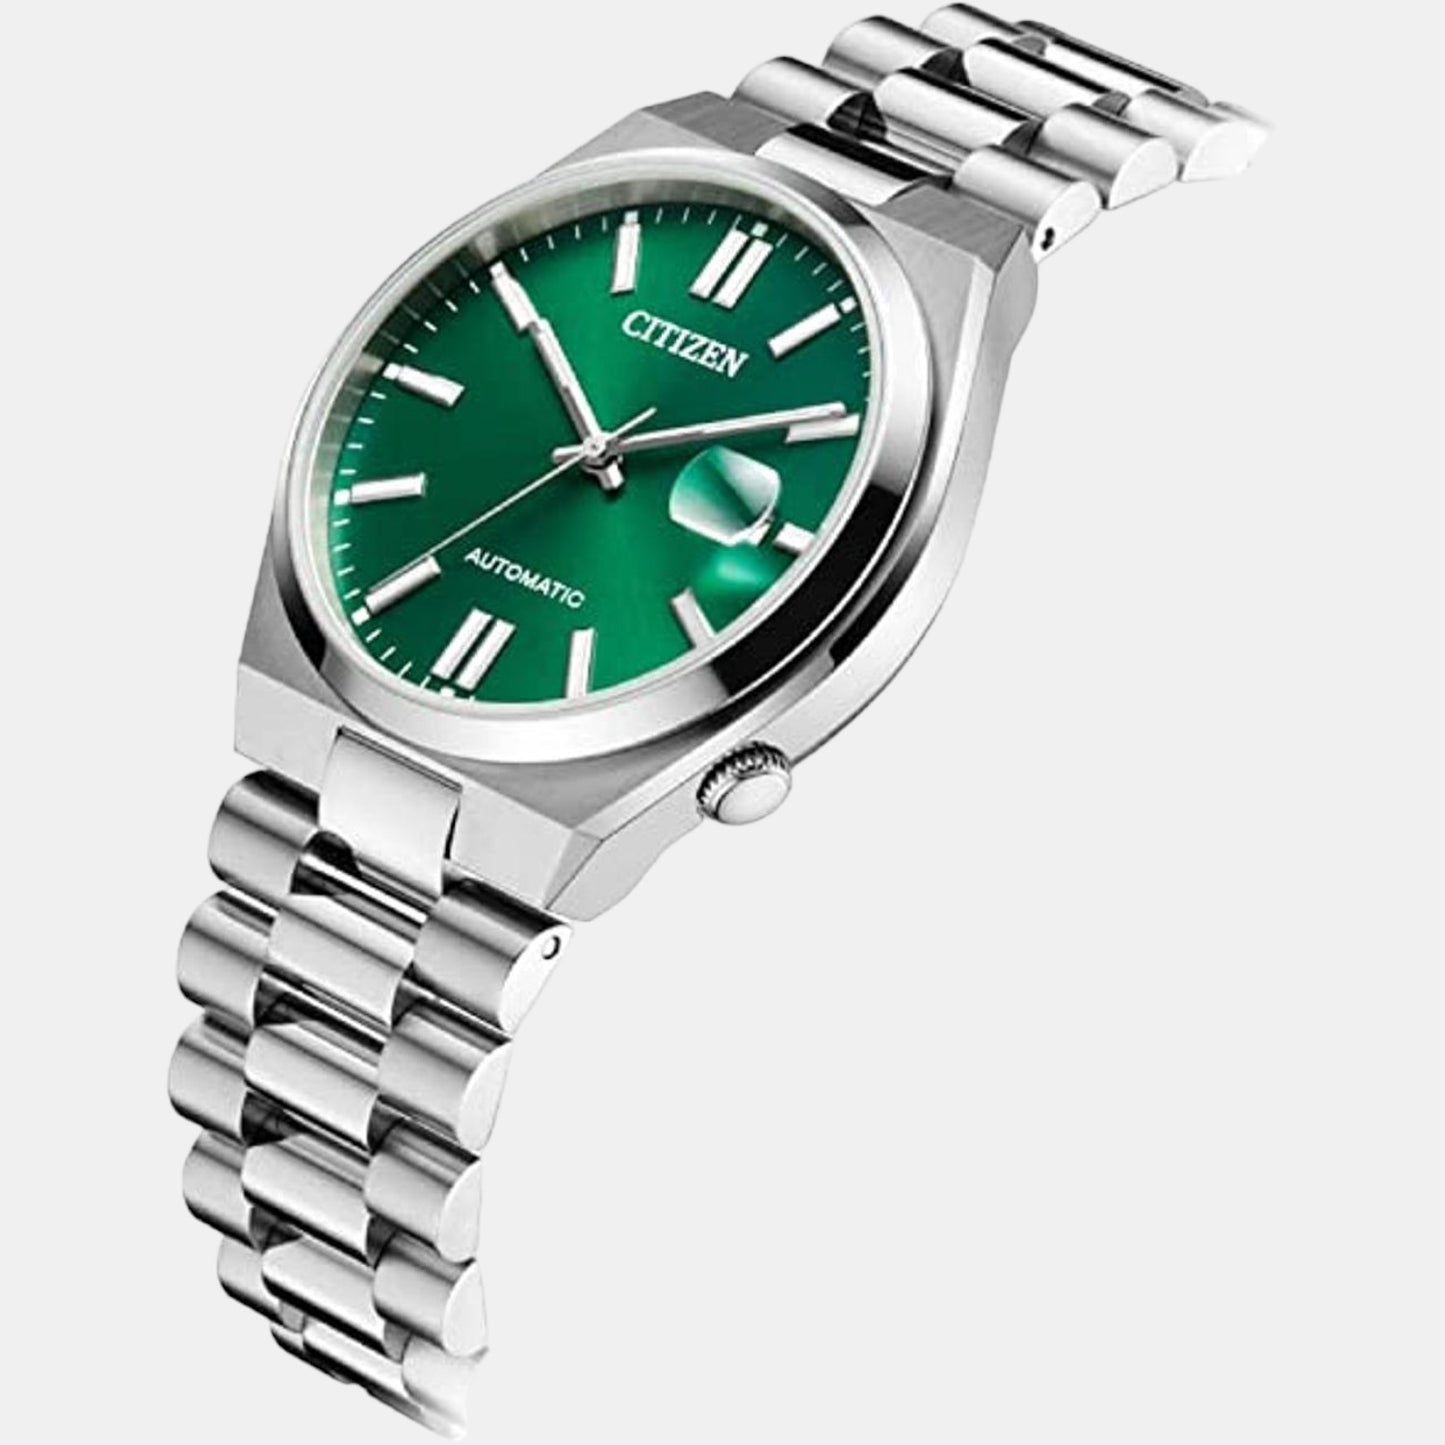 citizen-stainless-steel-green-analog-men-watch-nj0150-81x